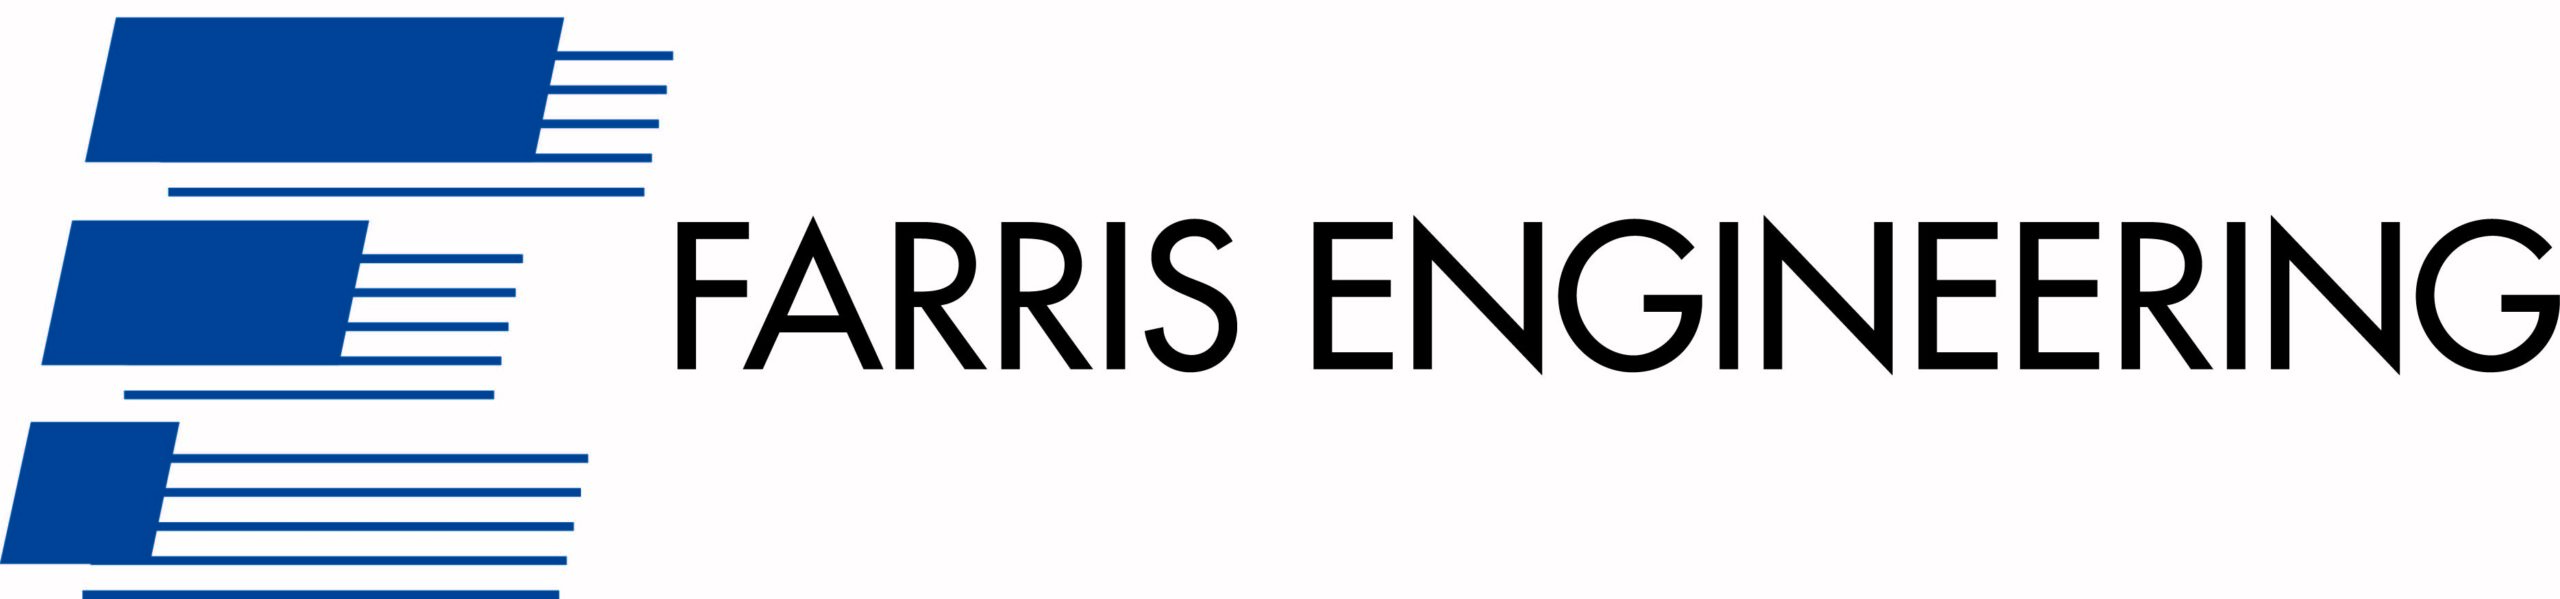 Farris Engineering Logo